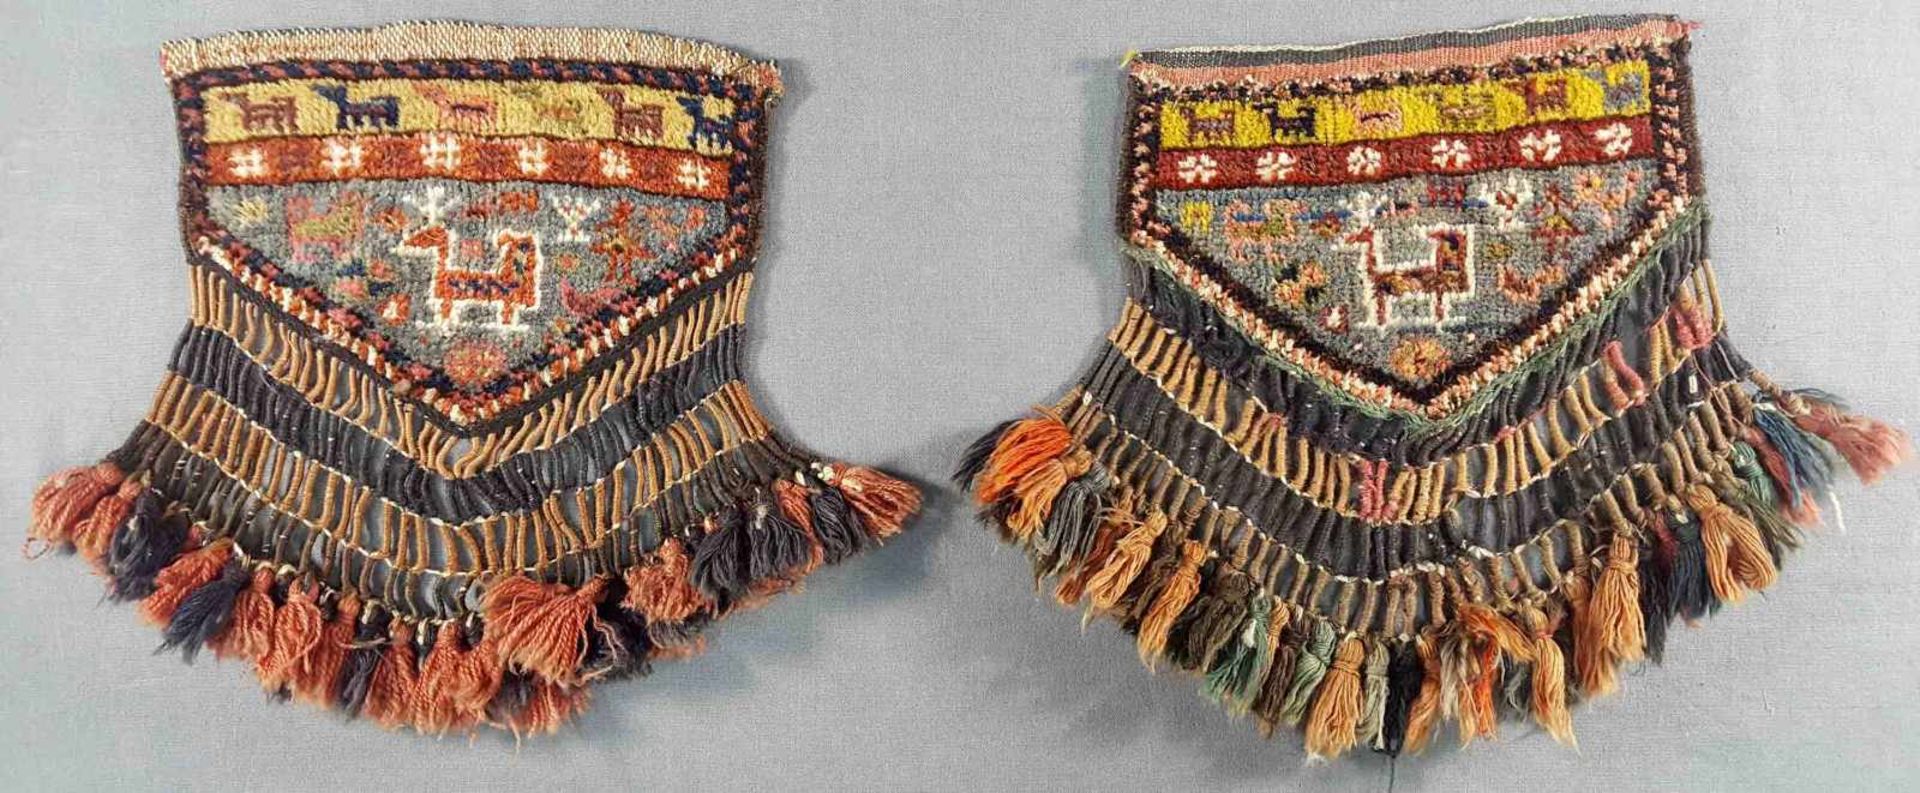 A pair of miniature - Asmalyk. Shah Savan. Turkoman. Antique, around 1900.